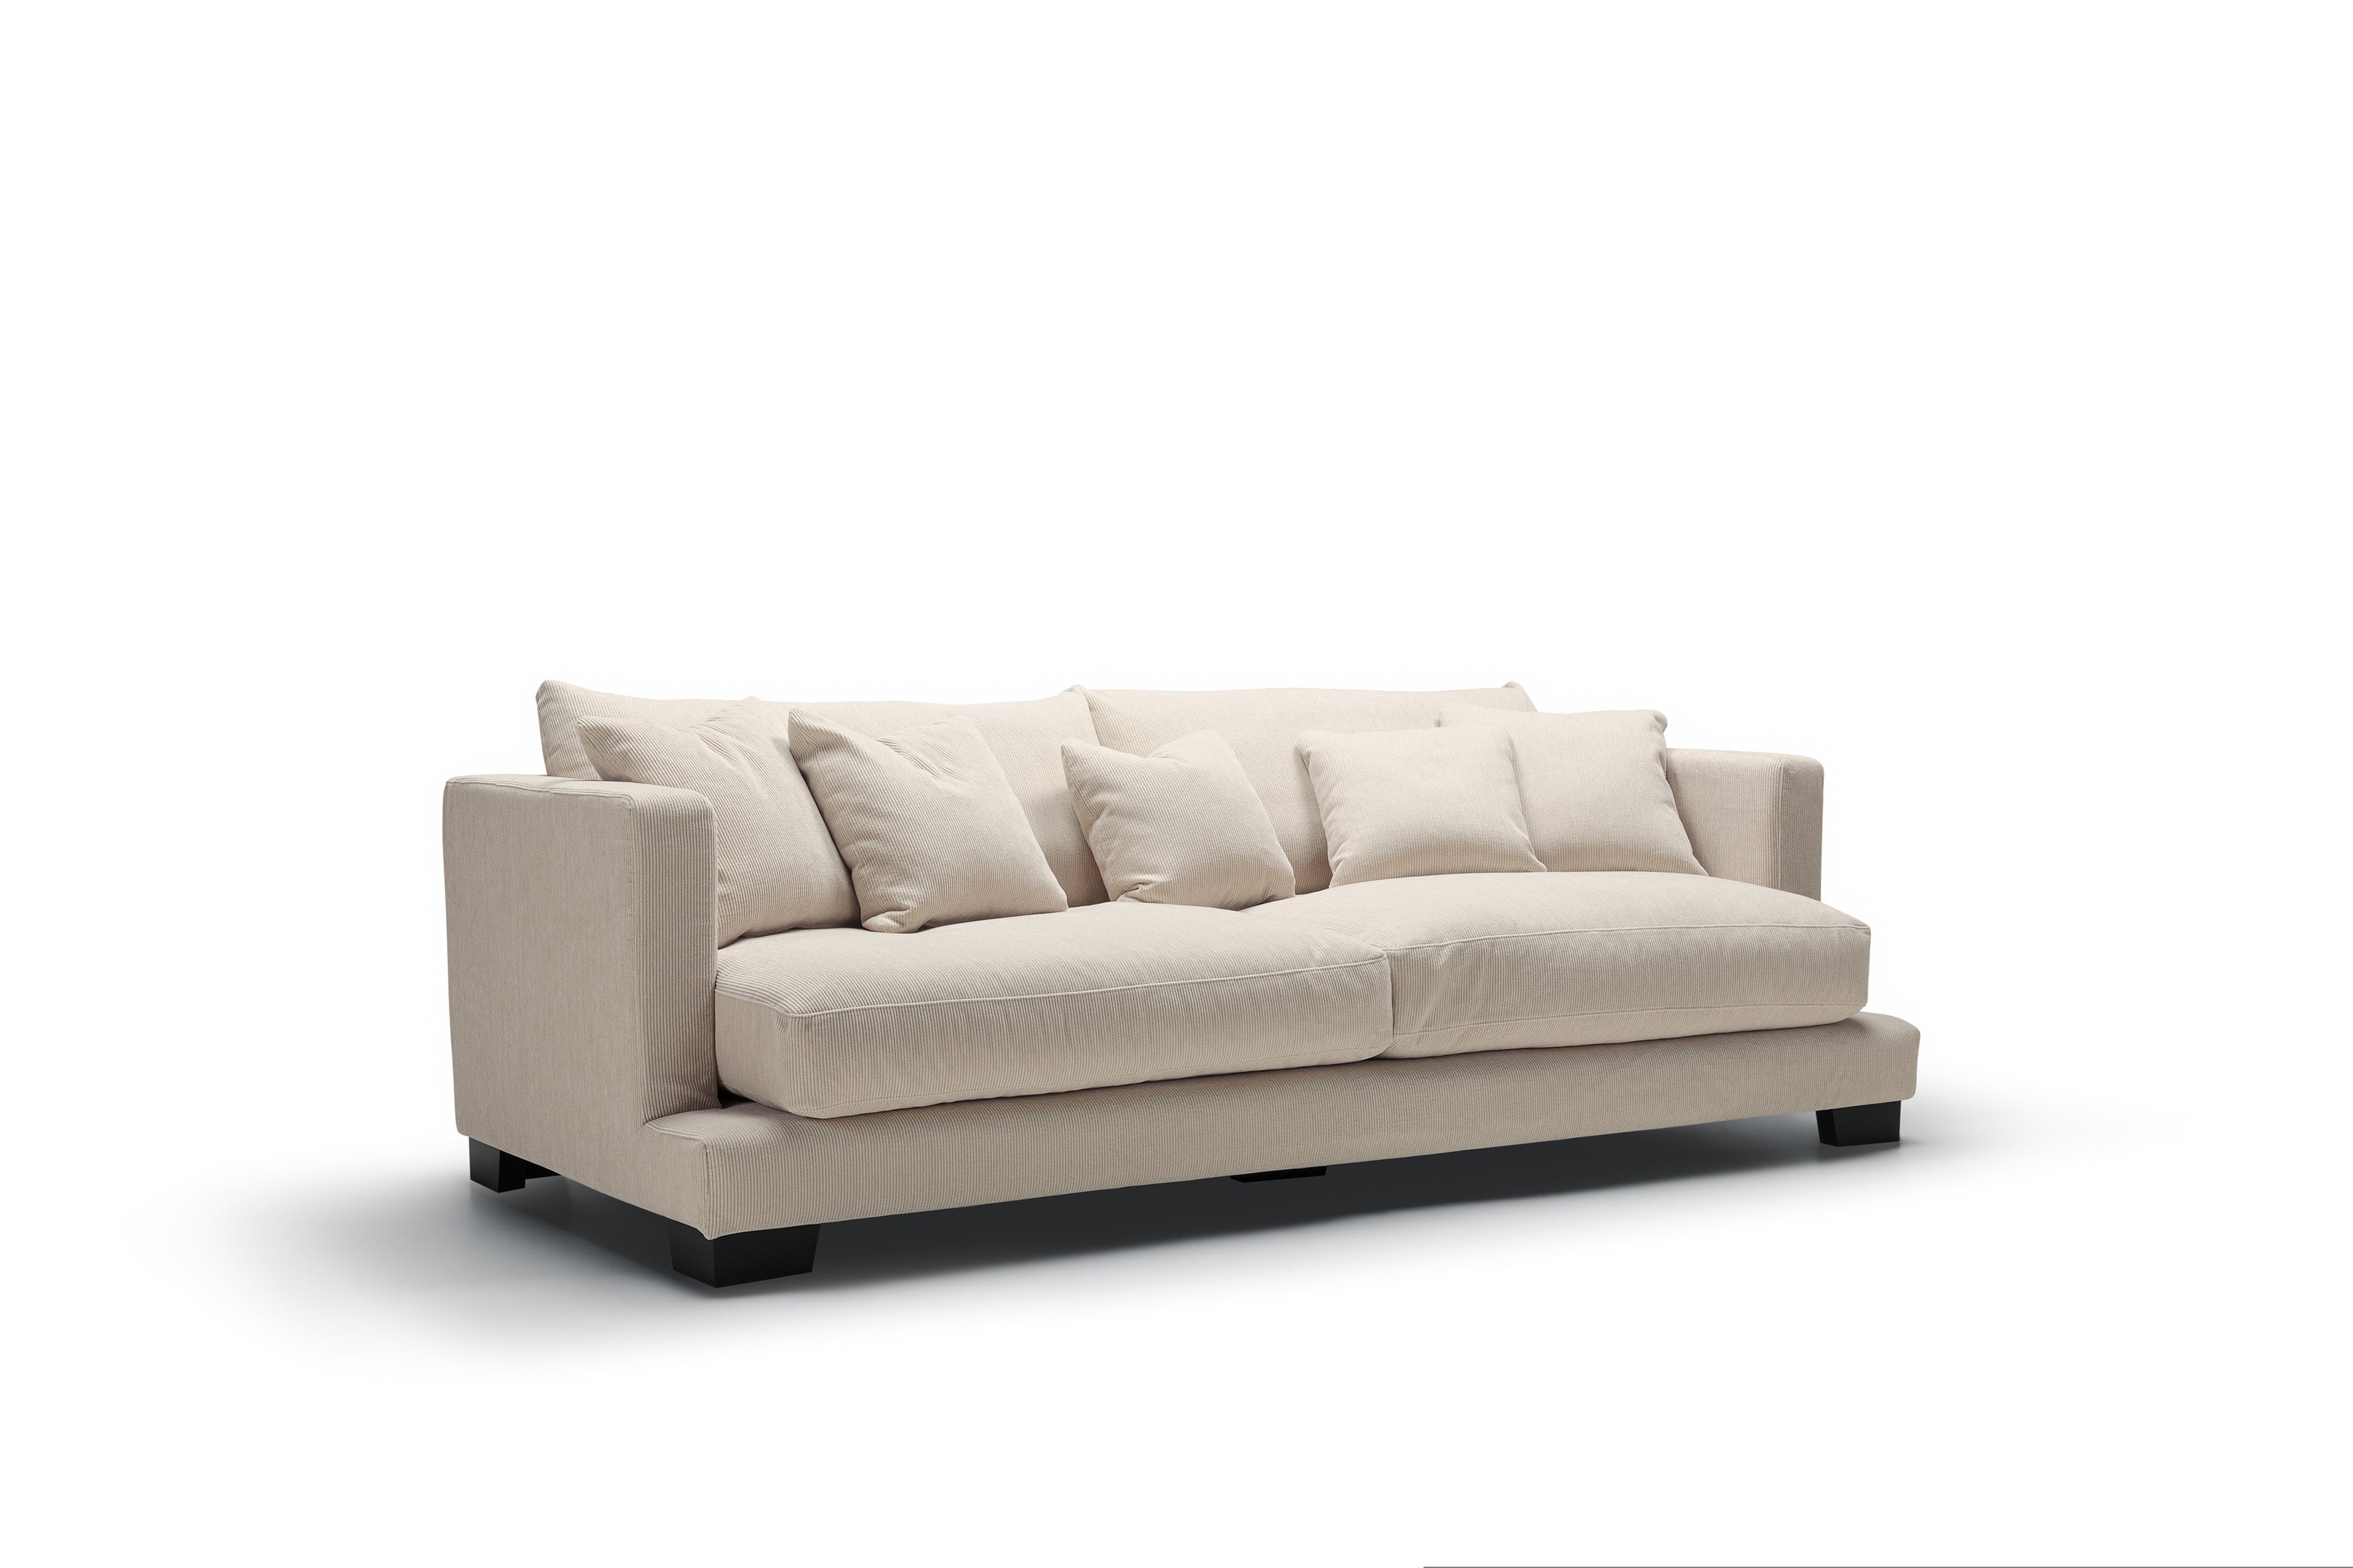 Mastrella Carmine 3 Seater Sofa